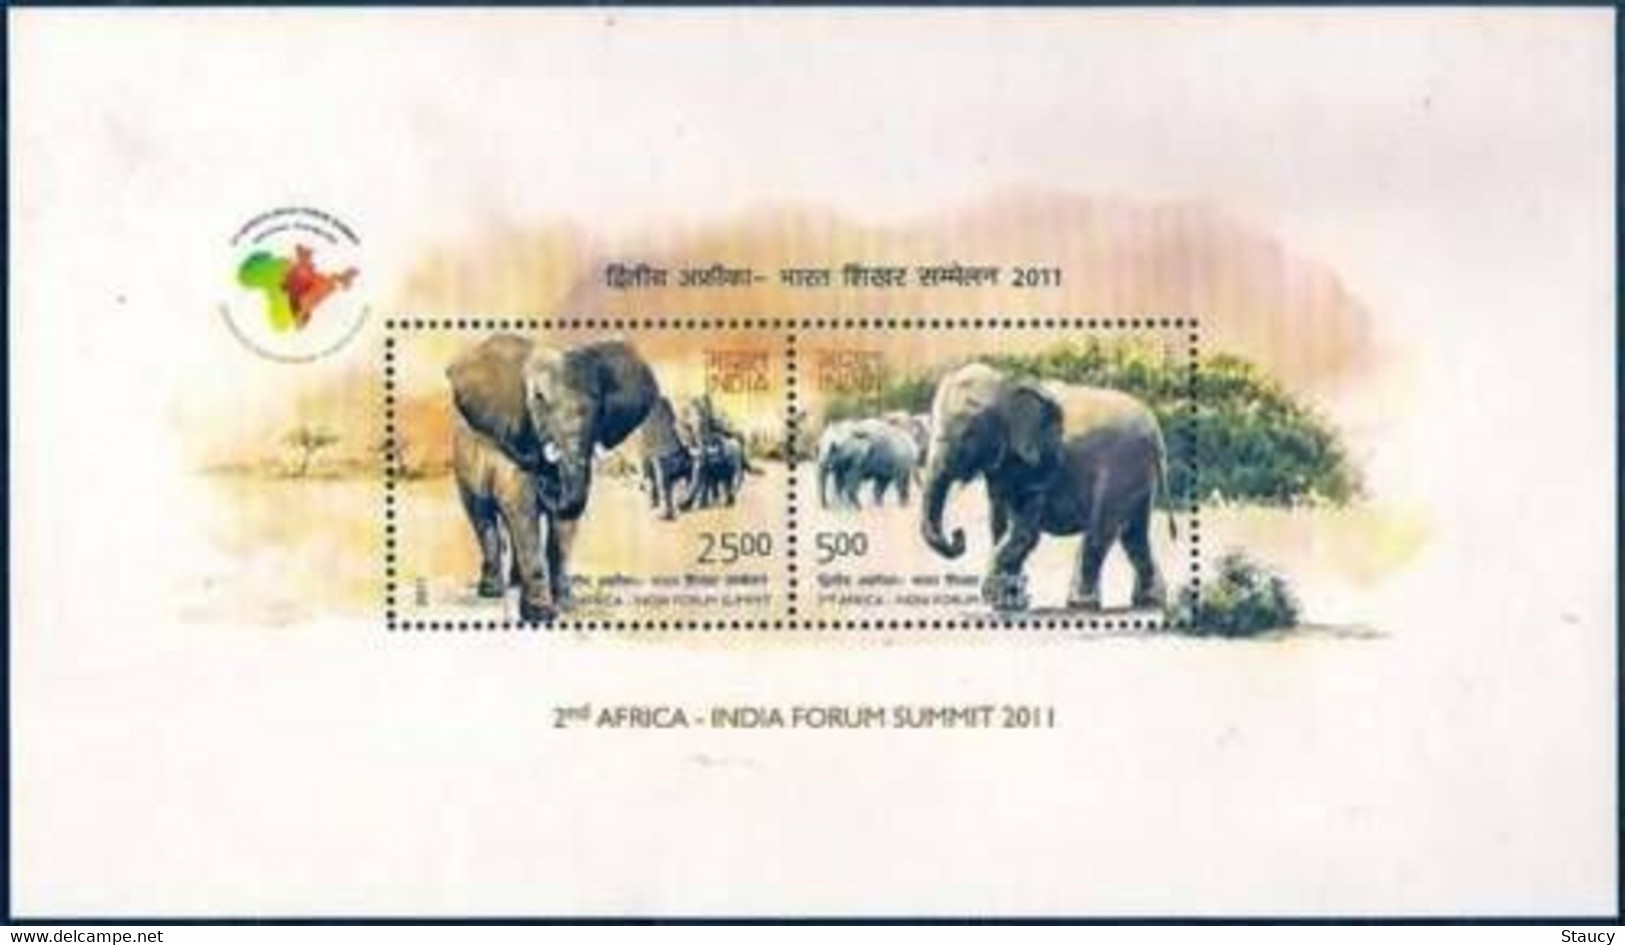 India 2011 Complete Year Miniature sheets 9v Elephants Cinema Khadi Gandhi MS MNH as per scan